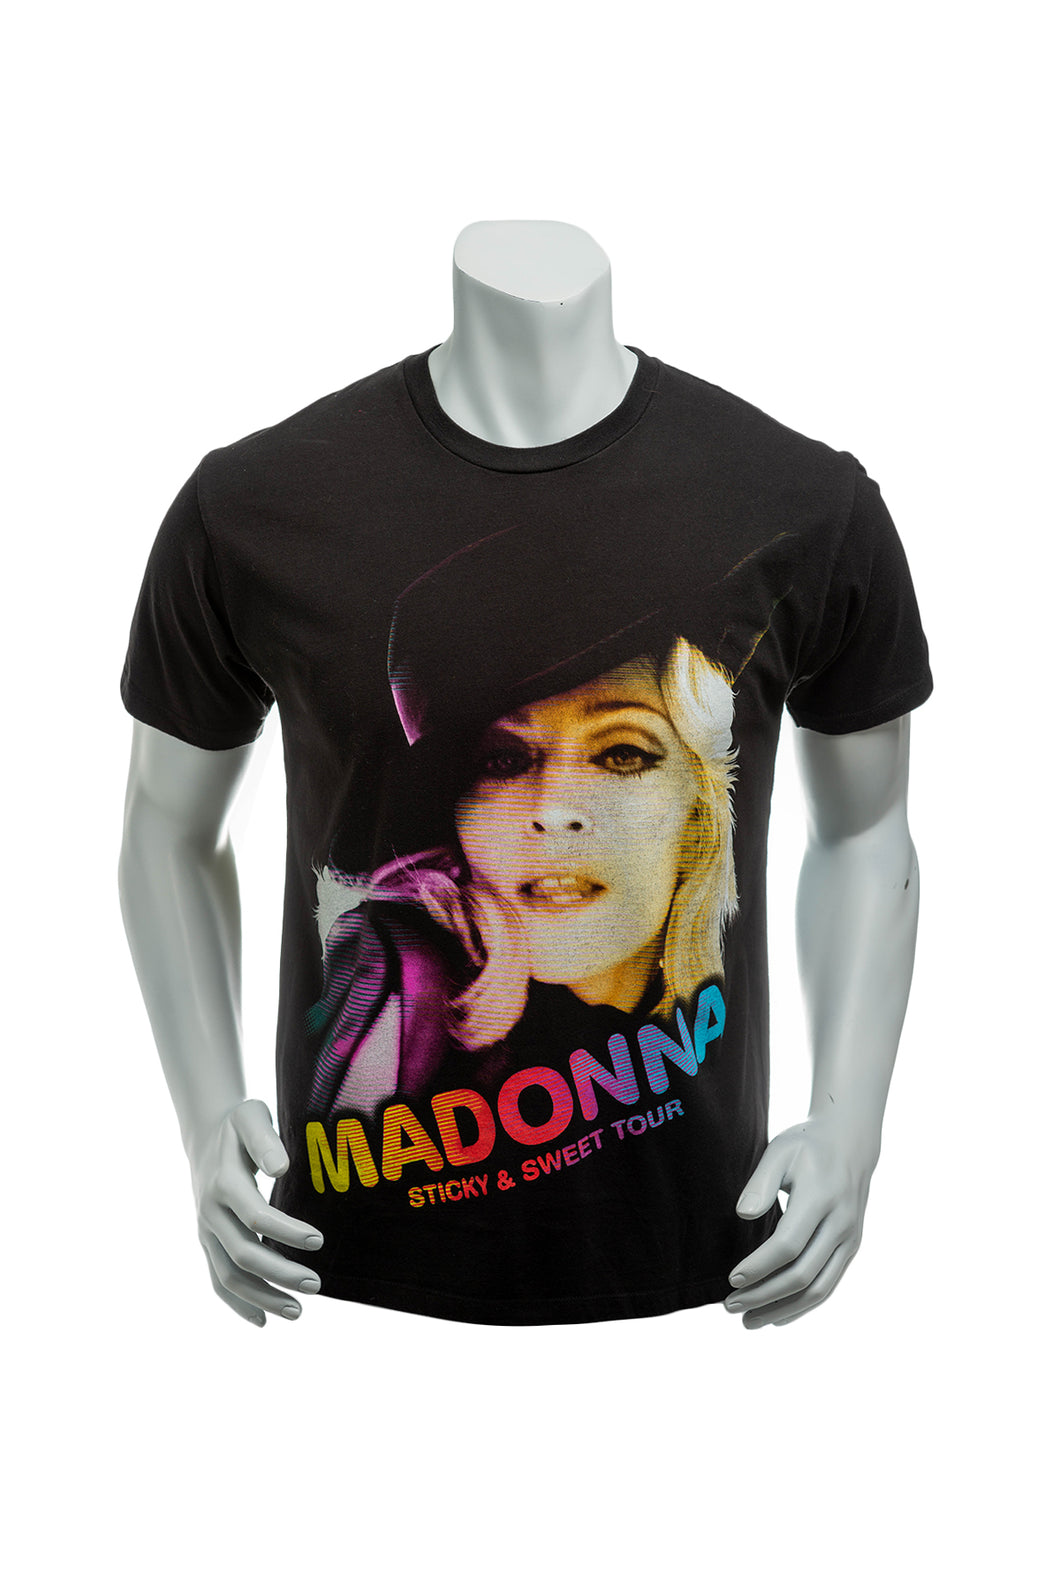 Madonna 2008 Sticky & Sweet Tour T-Shirt Men's Medium